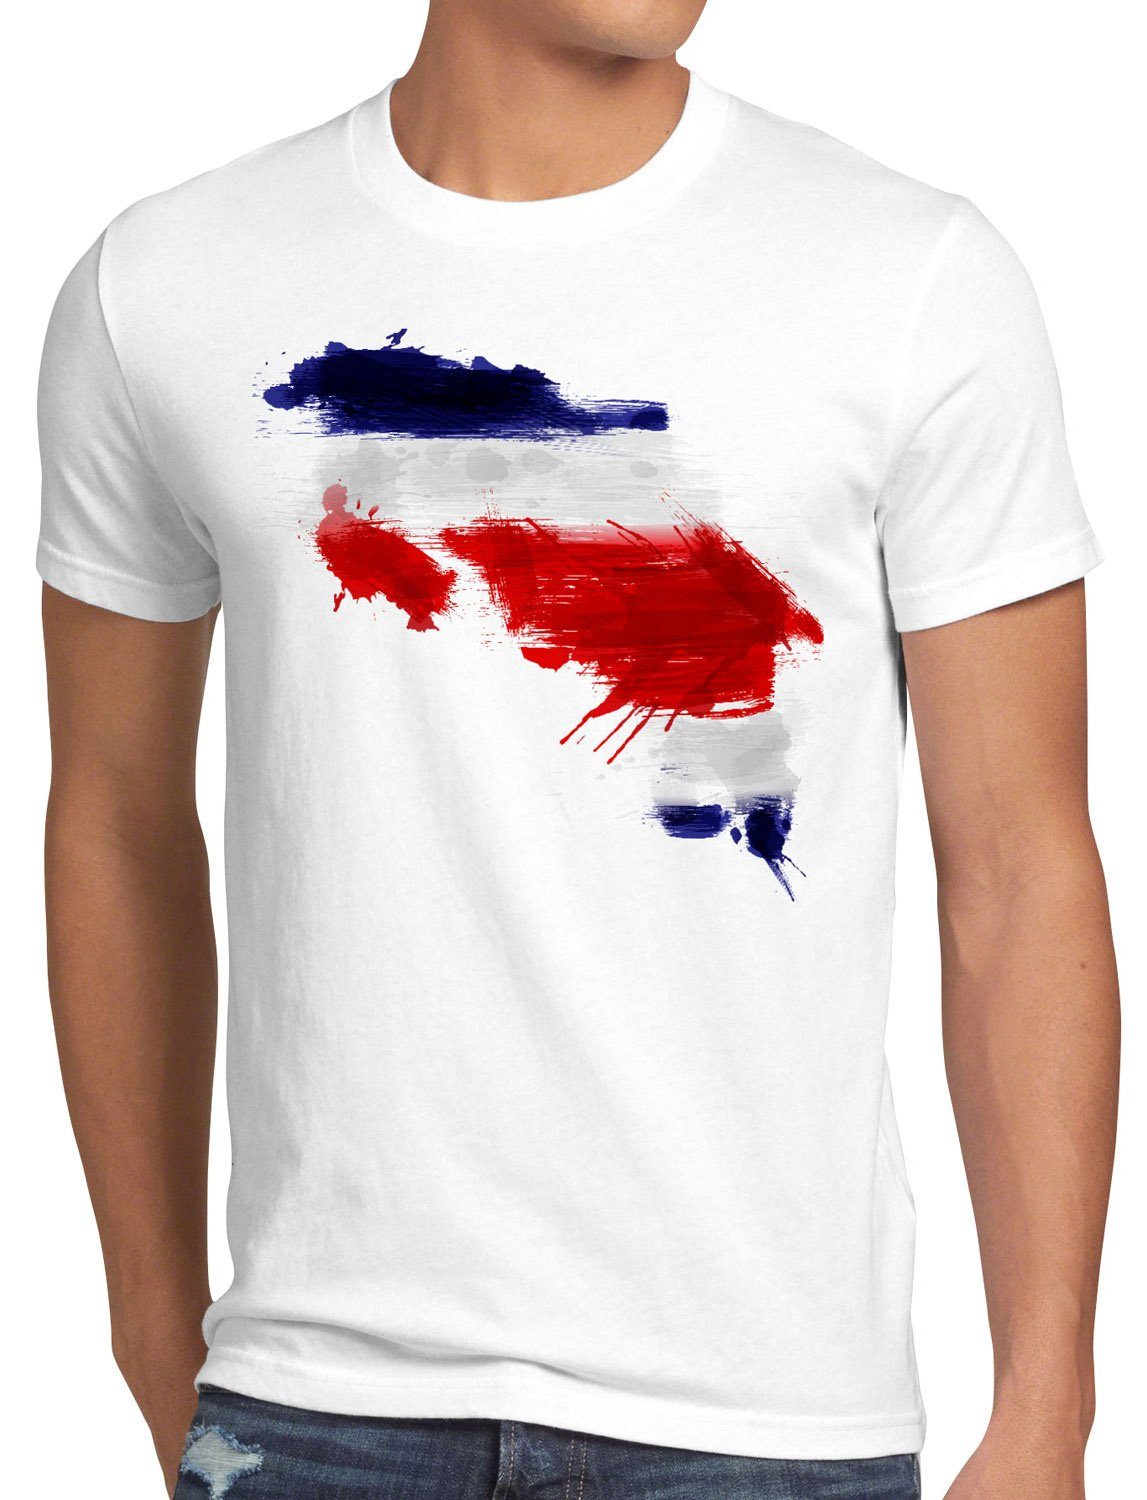 Print-Shirt Flagge Rica WM Fußball Herren weiß Costa T-Shirt style3 Sport EM Fahne